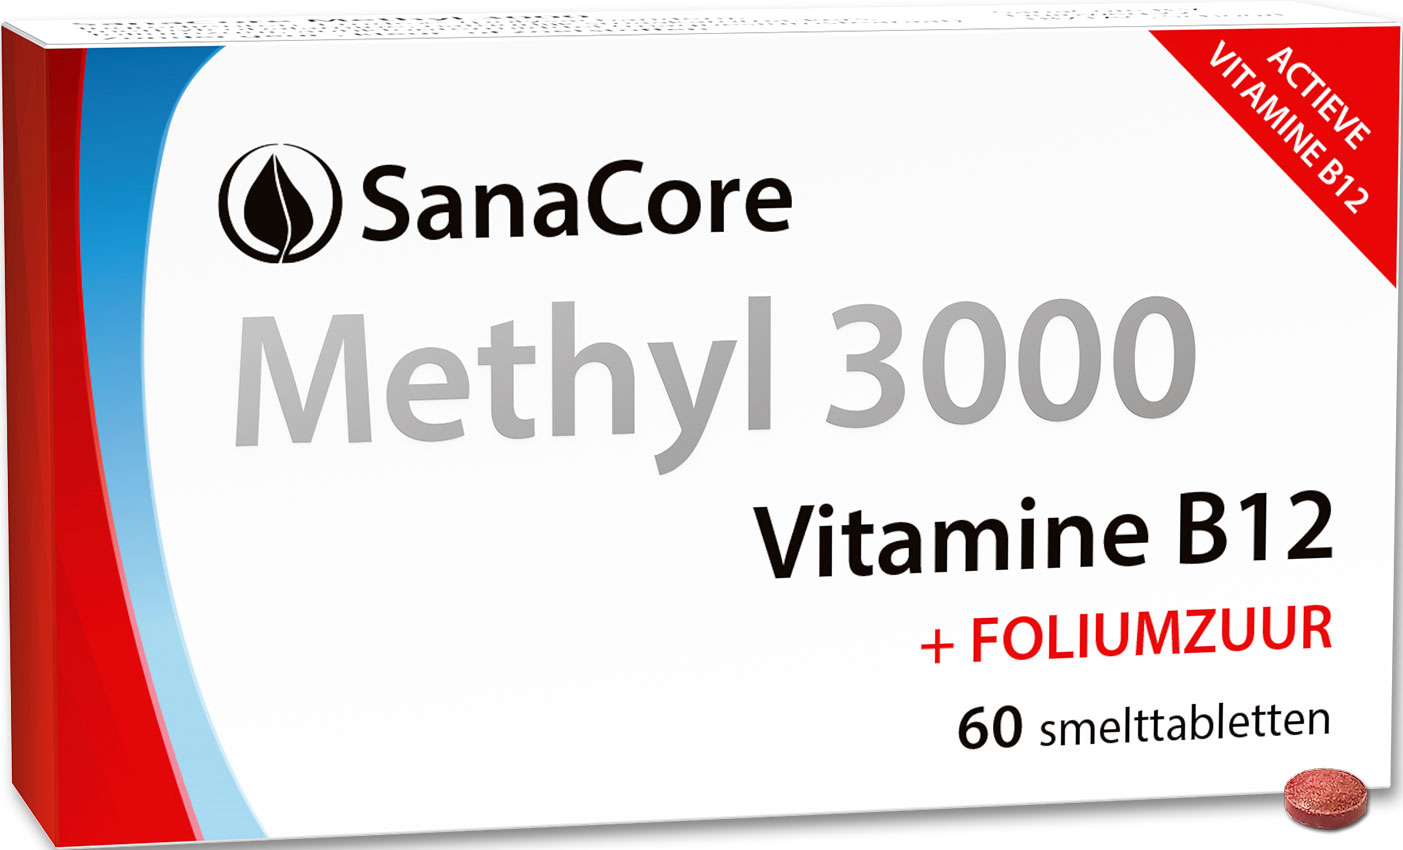 SanaCore Methyl 3000